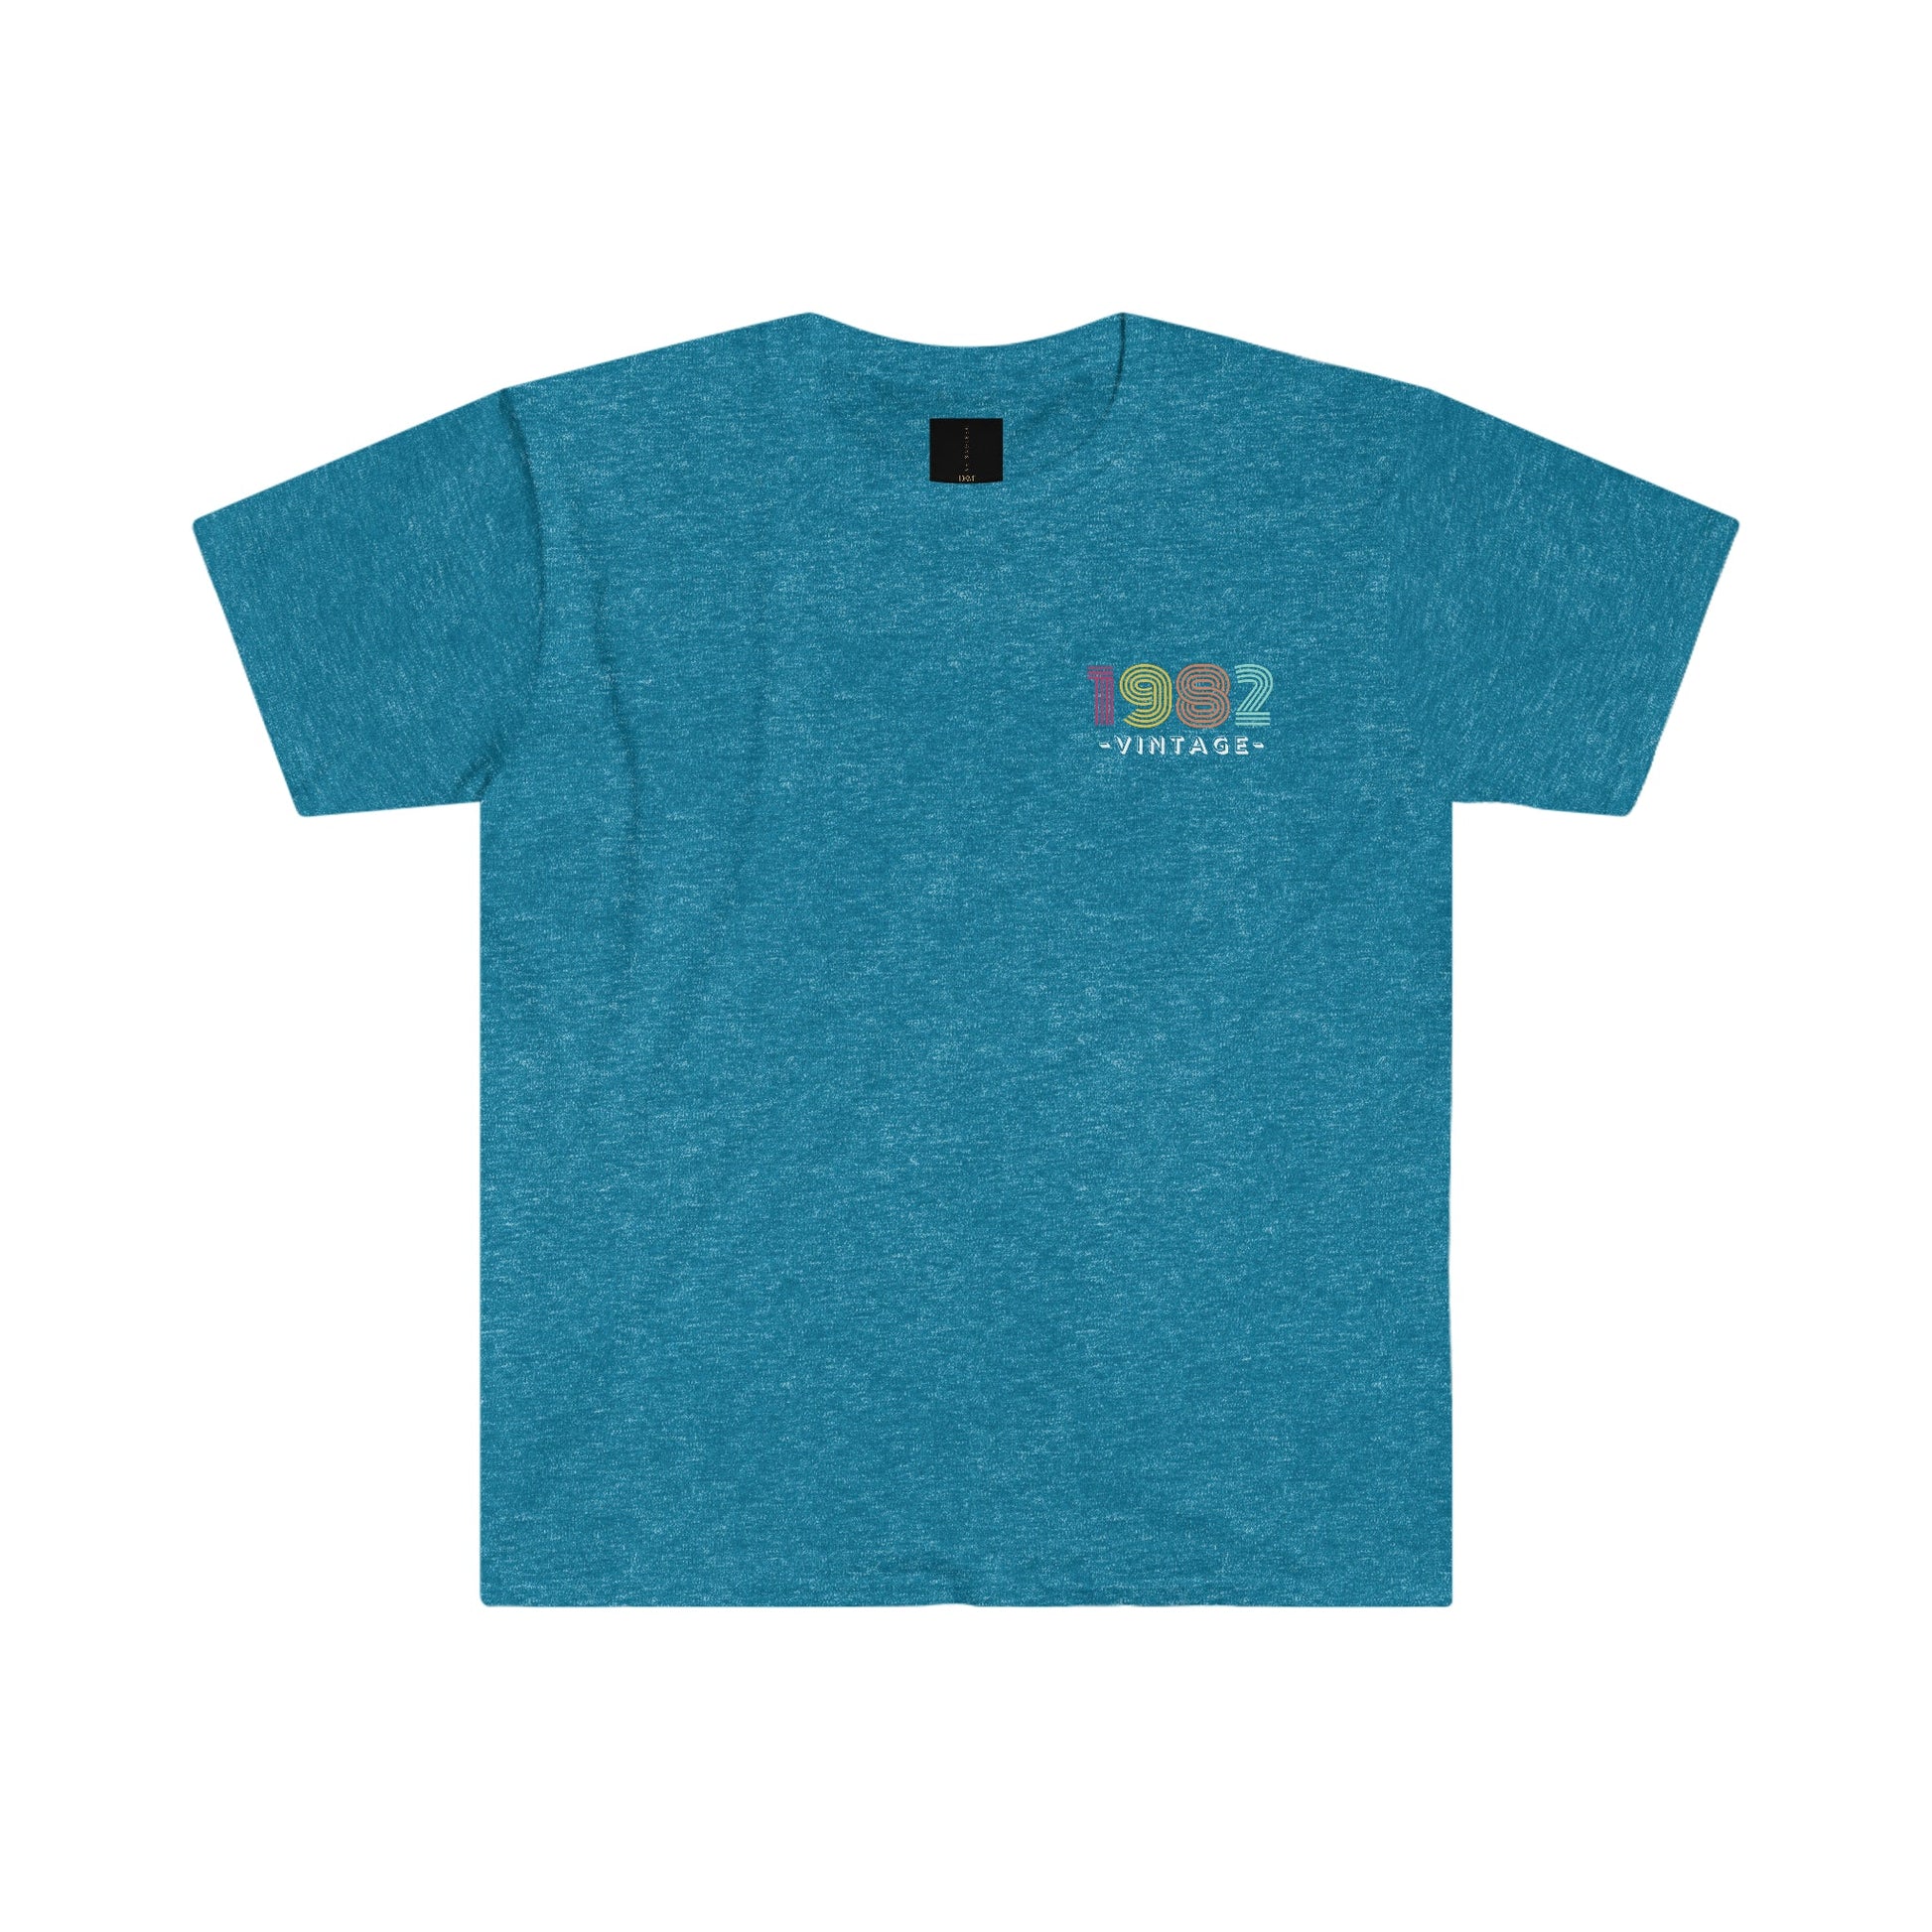 1982 Vintage, Unisex T-Shirt - Designs by DKMc